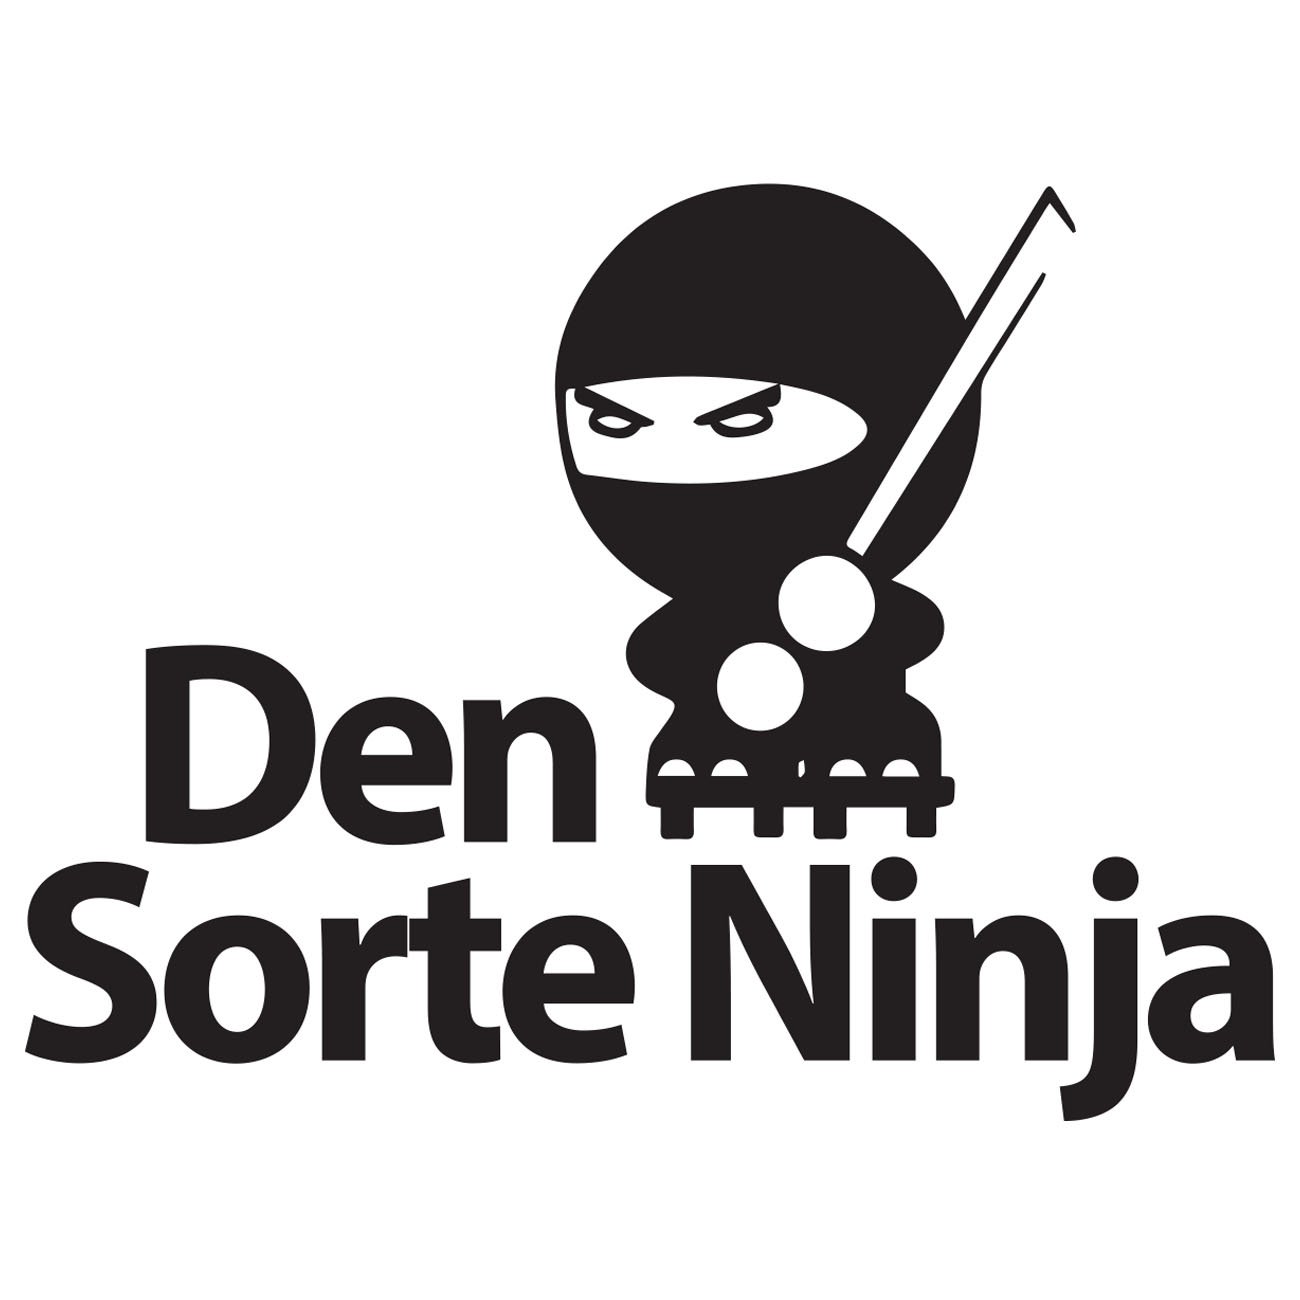 Den sorte ninja